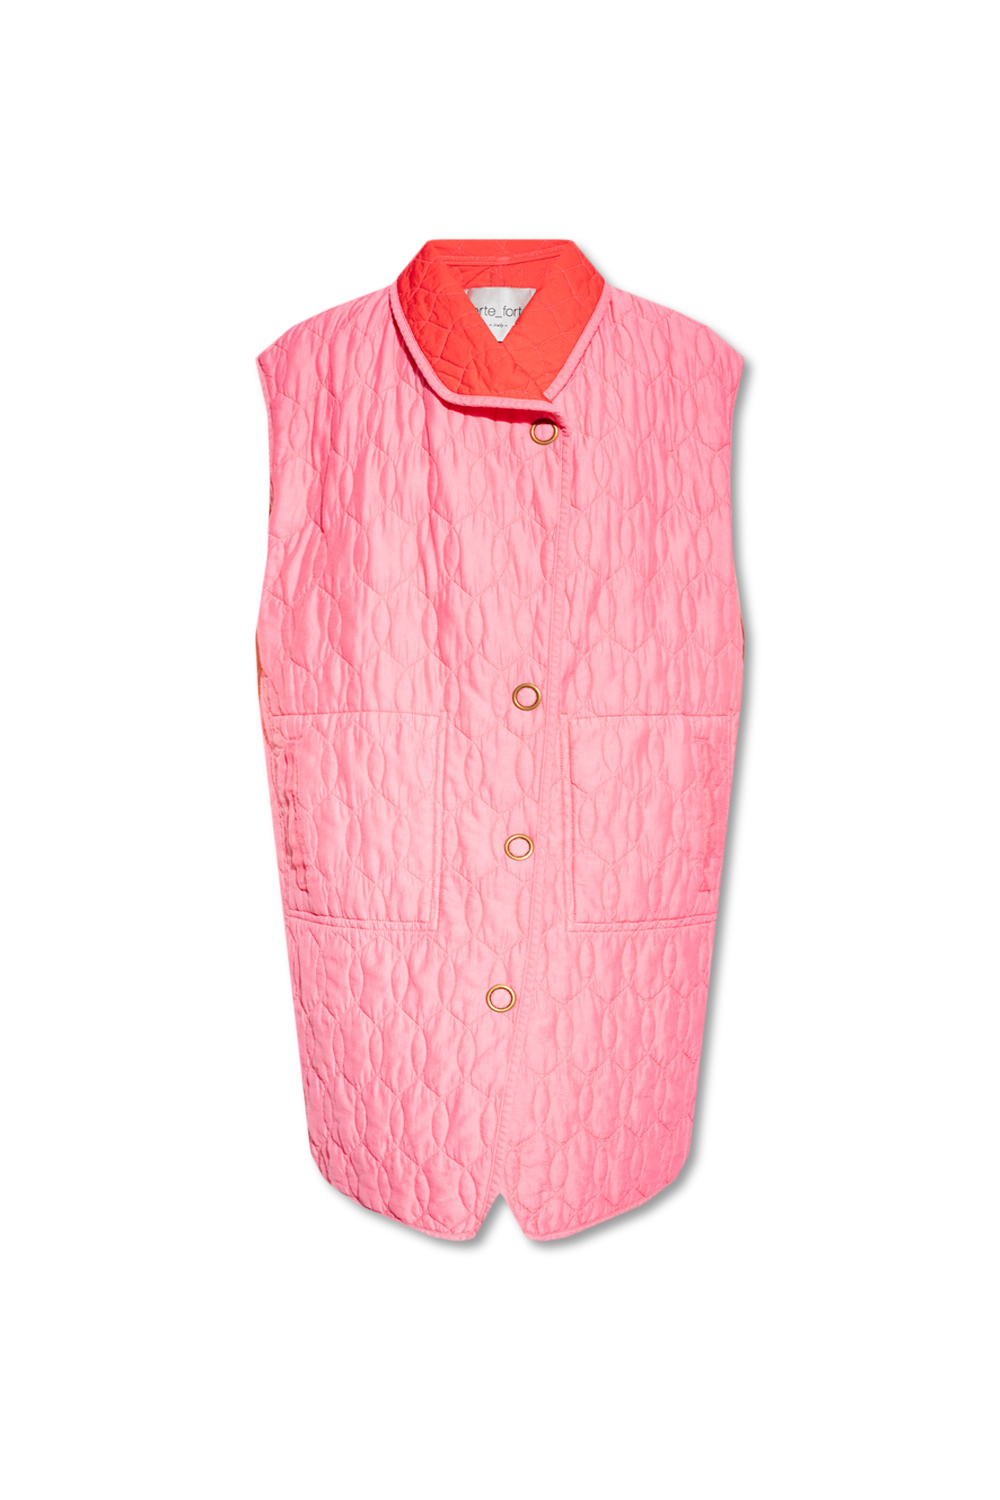 Roman V-Neck Sleeveless Vest Top in Pink  Trendy fashion tops 2021, Vest  top, Sleeveless vest